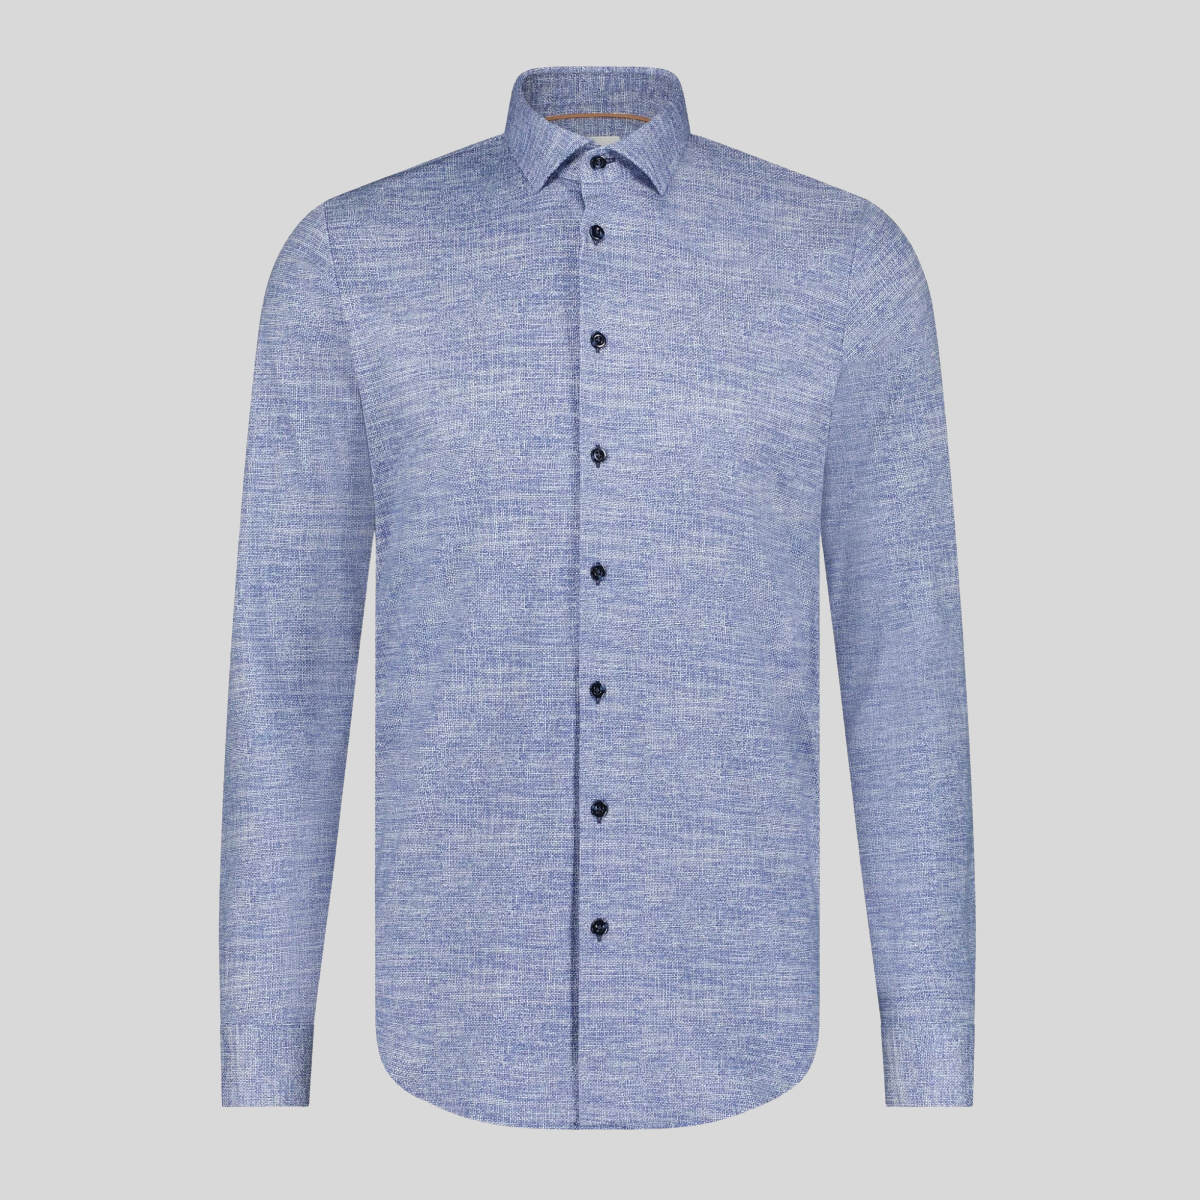 Gotstyle Fashion - Blue Industry Collar Shirts Crosshatch Weave Jersey Shirt - Denim